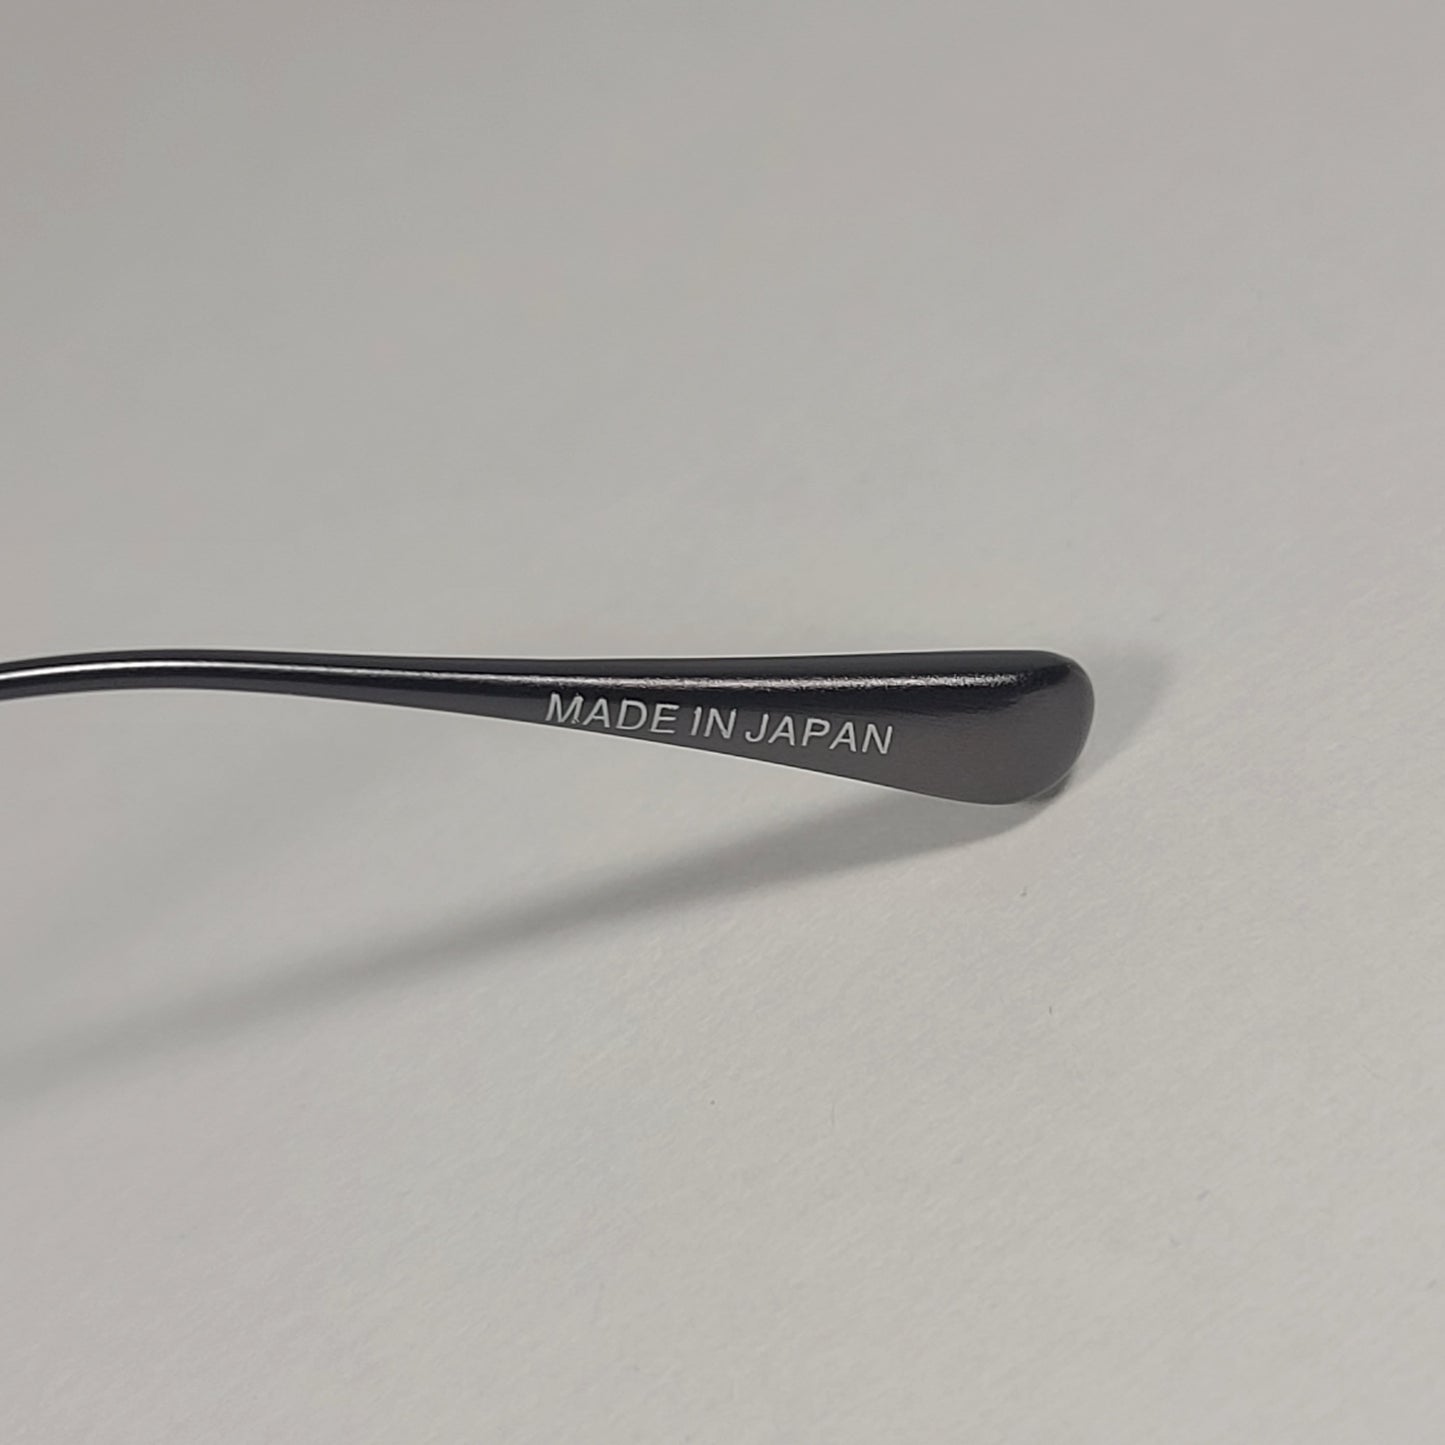 John Varvatos Men’s Half Rim Pilot Sunglasses V534 Gunmetal Frame Gray Gradient Lens - Sunglasses